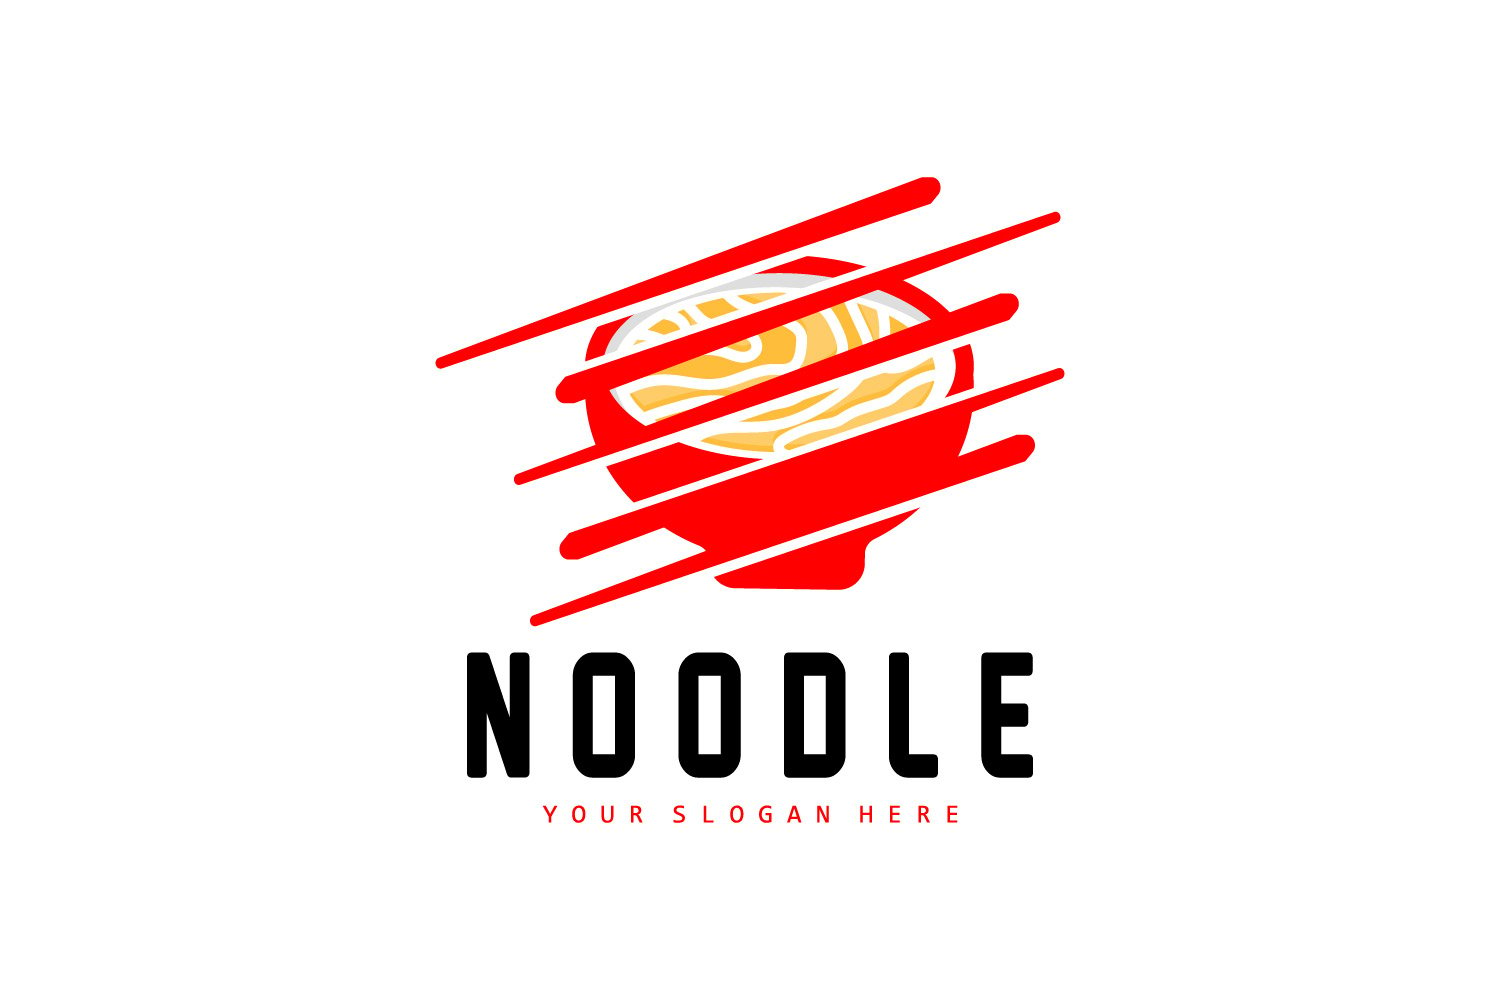 Noodle Logo Ramen Vector Chinese Food v15